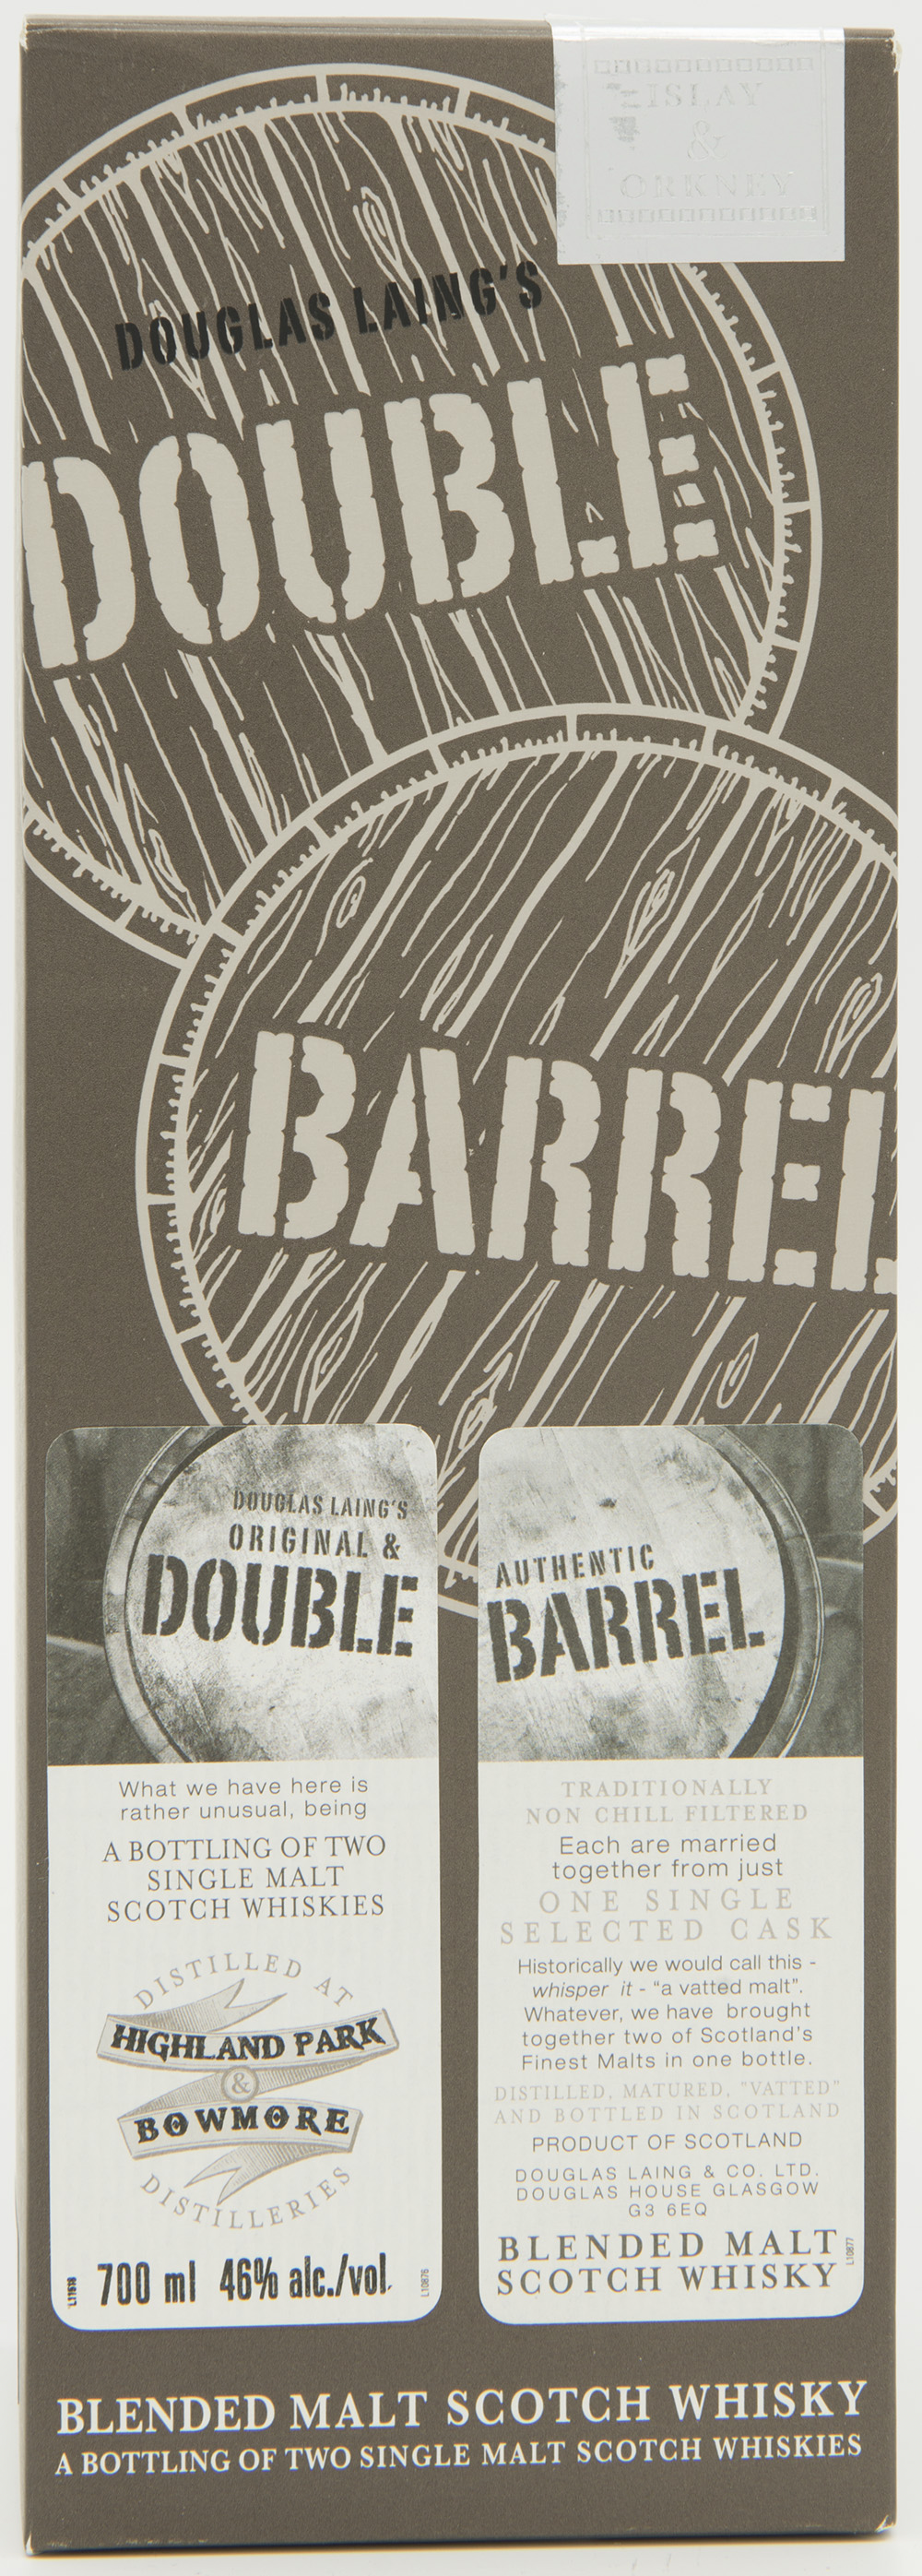 Billede: DSC_3673 Douglas Laing's Double Barrel - Highland Park and Bowmore - box front.jpg